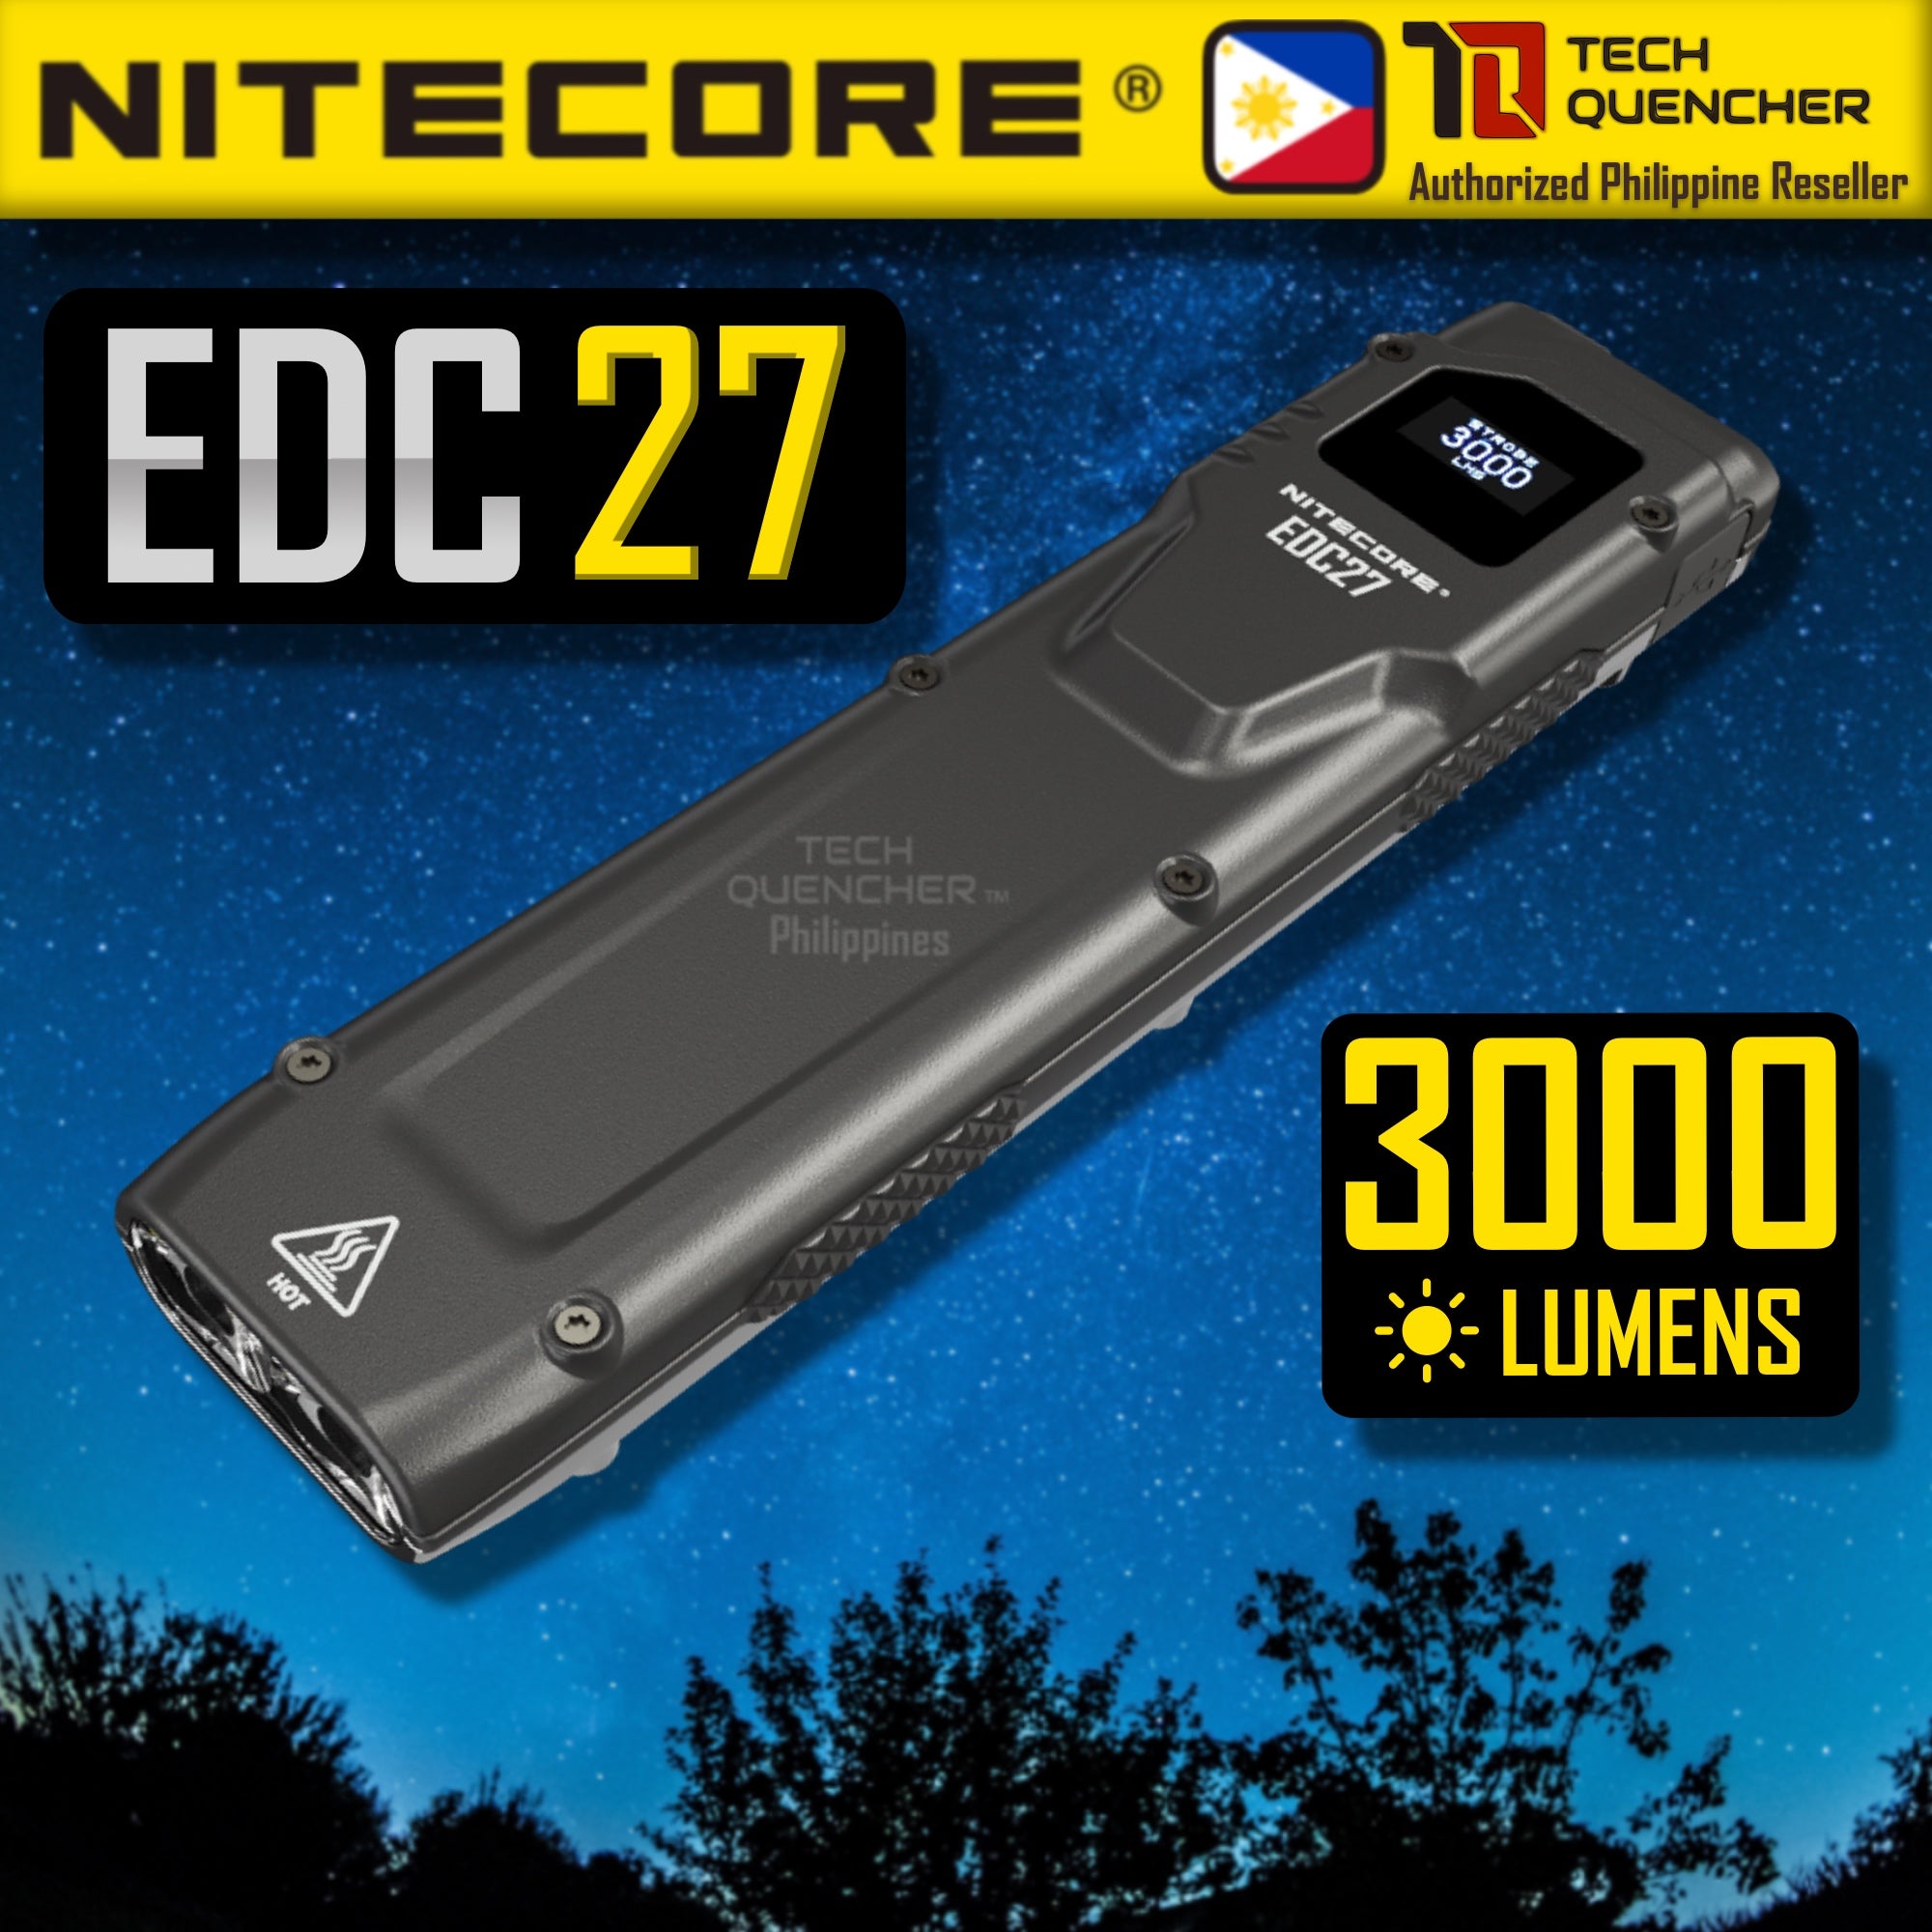 Nitecore EDC27 Flashlight